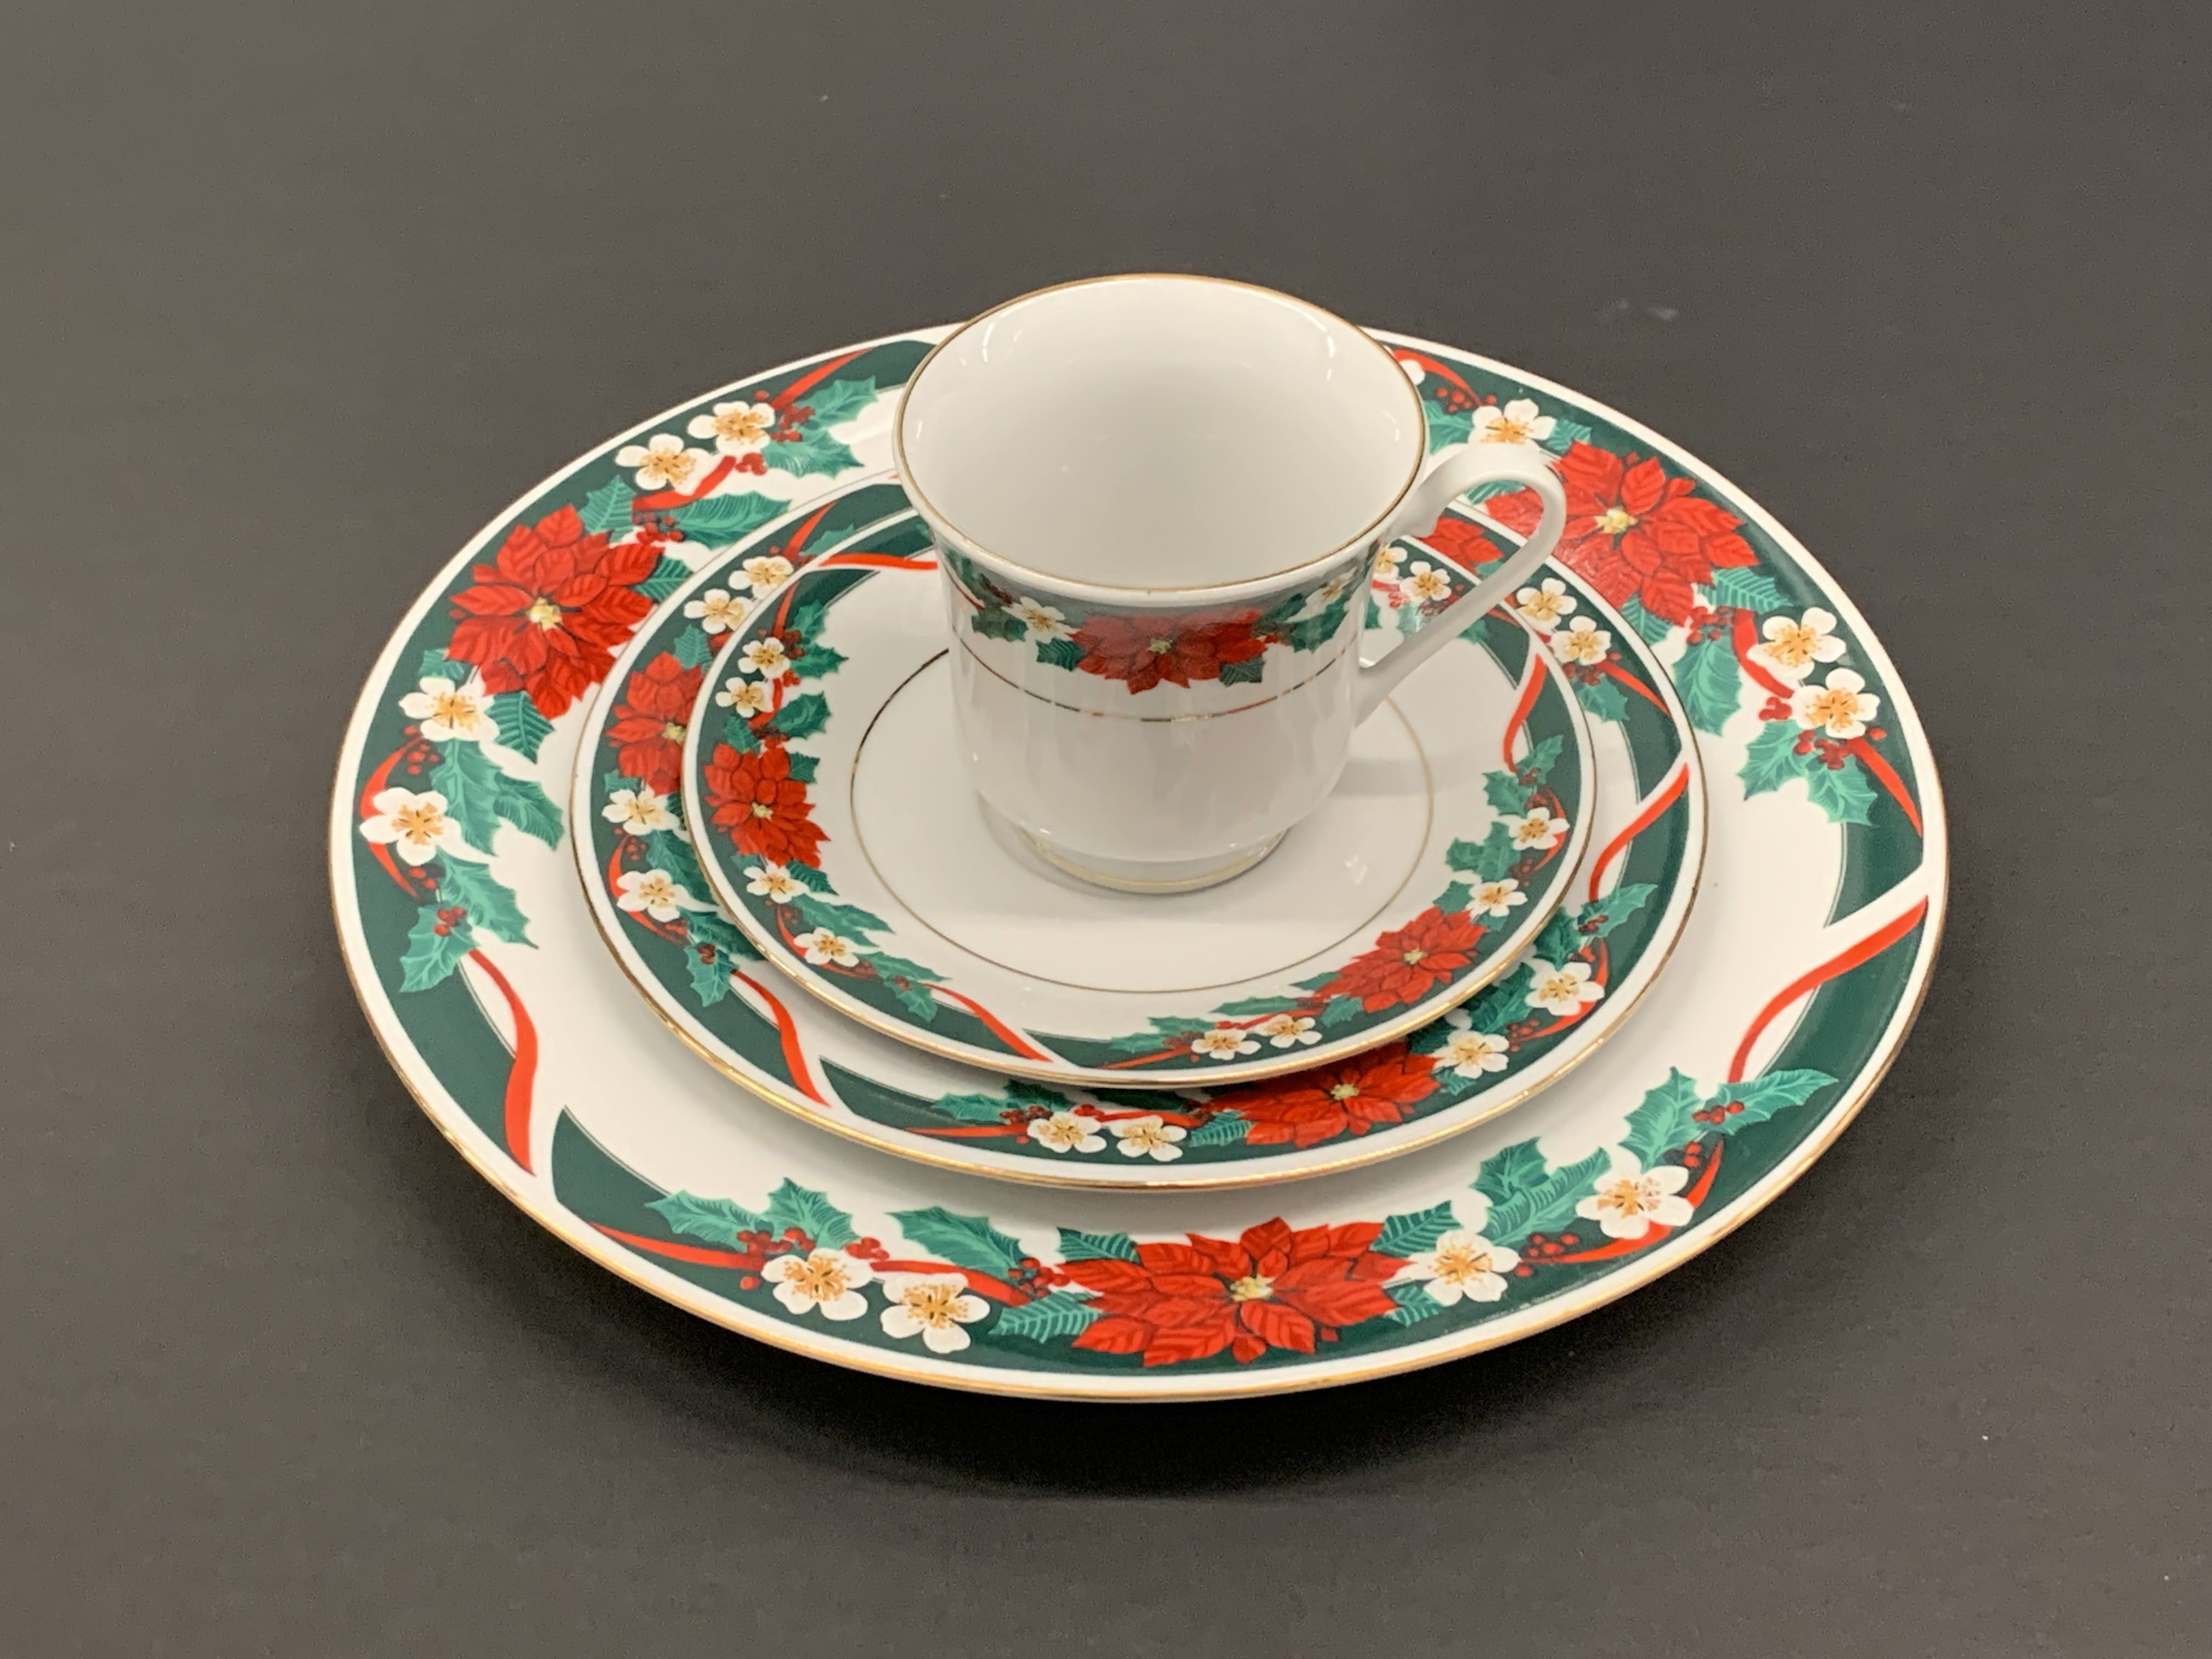 Tienshan Porcelain Fine China - Deck The Halls - 4 Piece Dinnerware Set